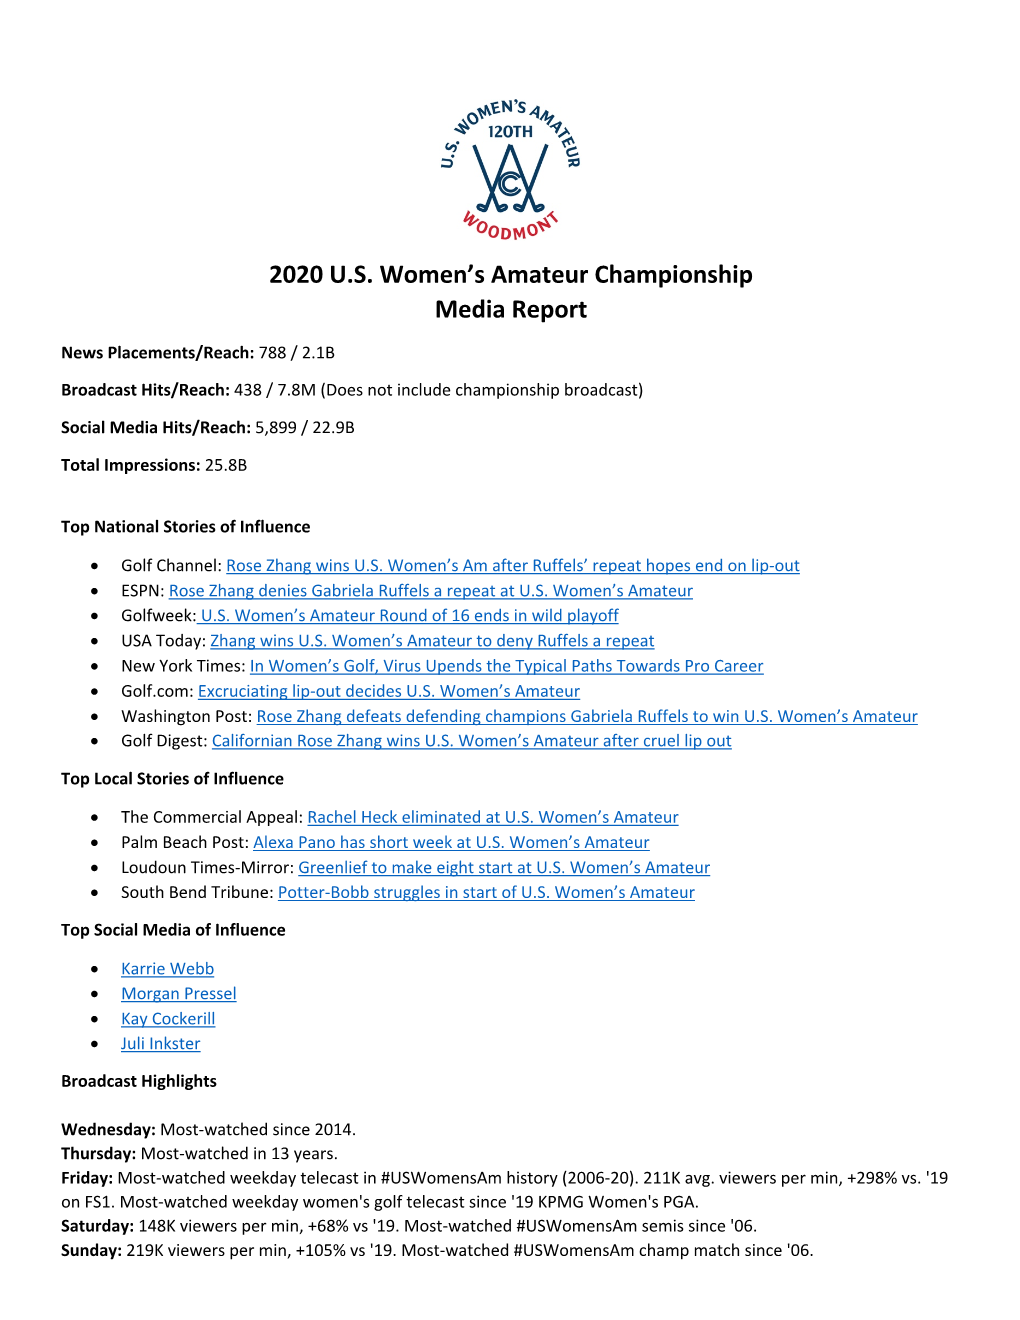 2020 U.S. Women's Amateur Championship Media Report